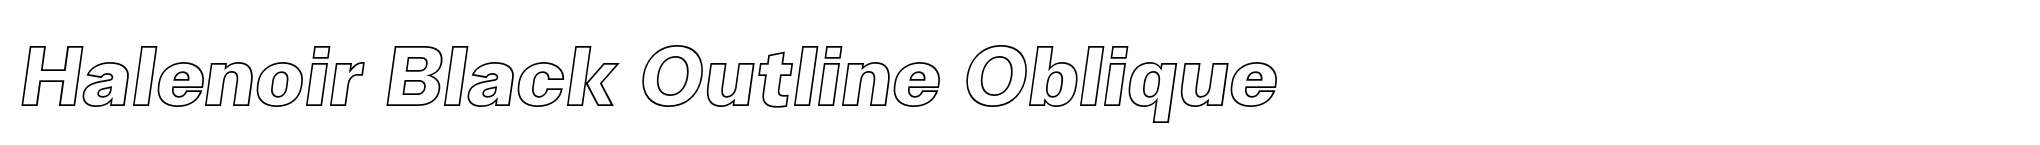 Halenoir Black Outline Oblique image